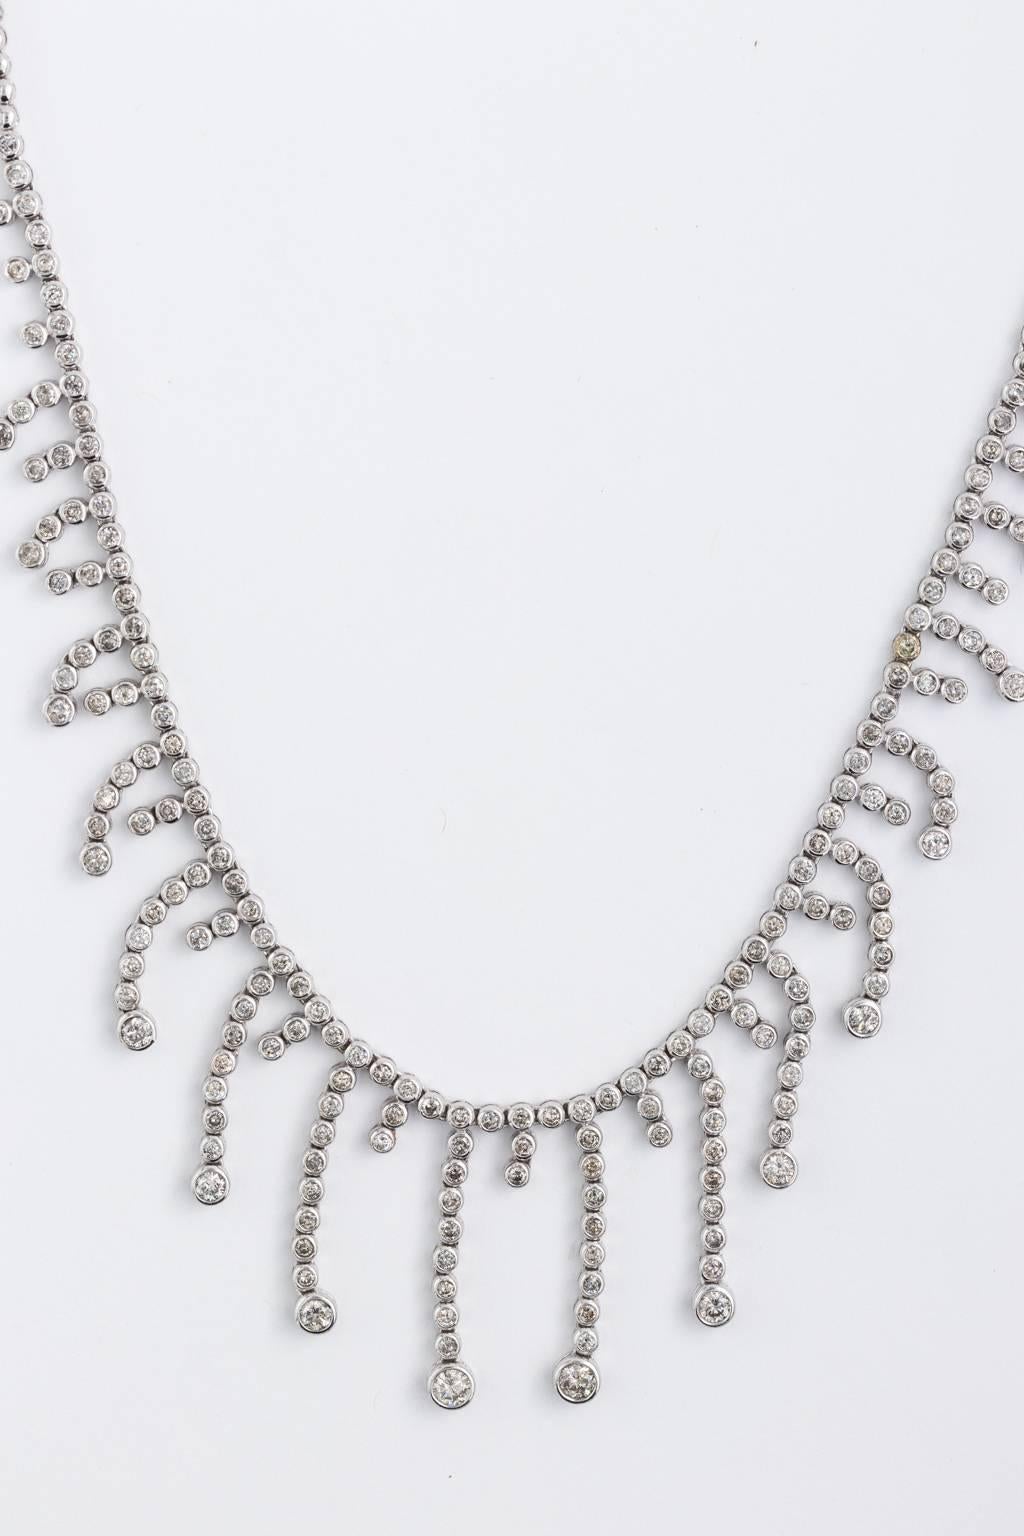 14 Karat White Gold Diamond Bib Fringe Necklace 5.7-7.1 Carat Diamonds In Good Condition For Sale In St.amford, CT